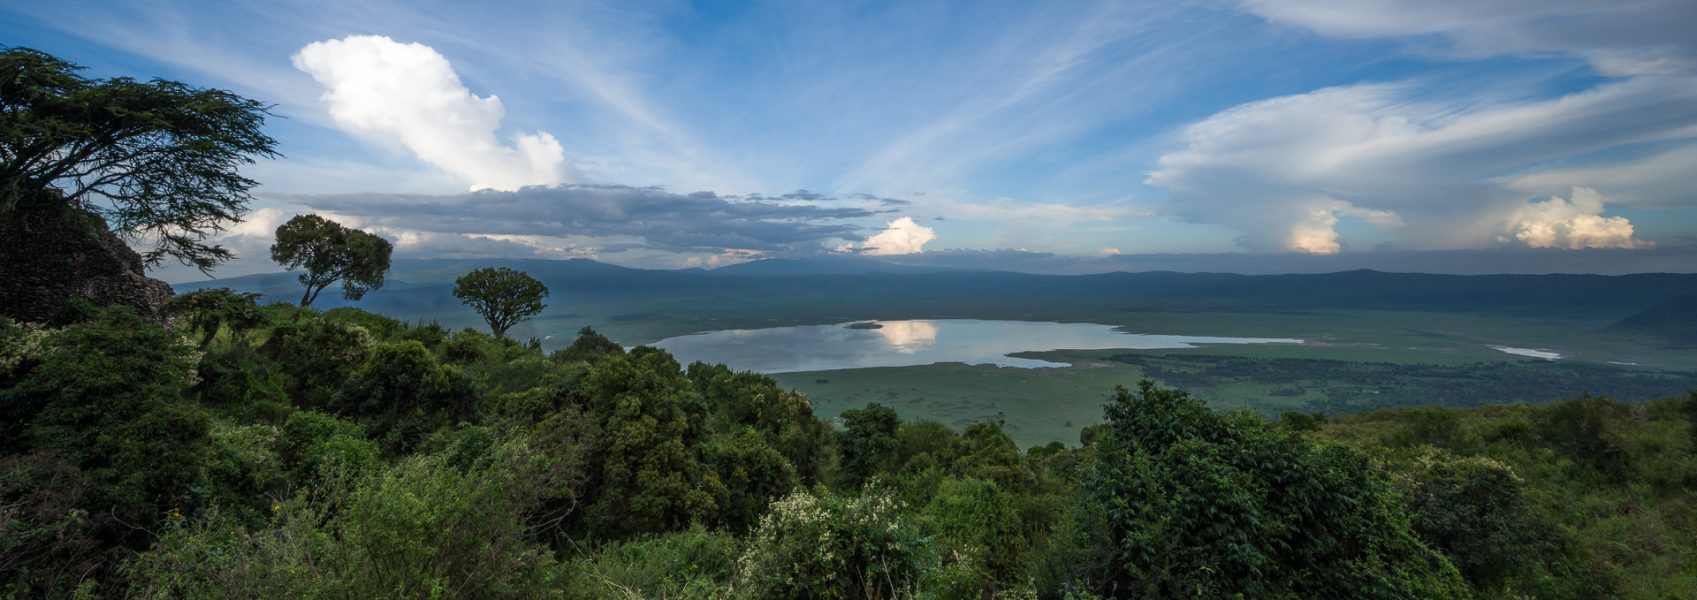 Ngorongoro Crater after a Storm - Pat Honeycutt